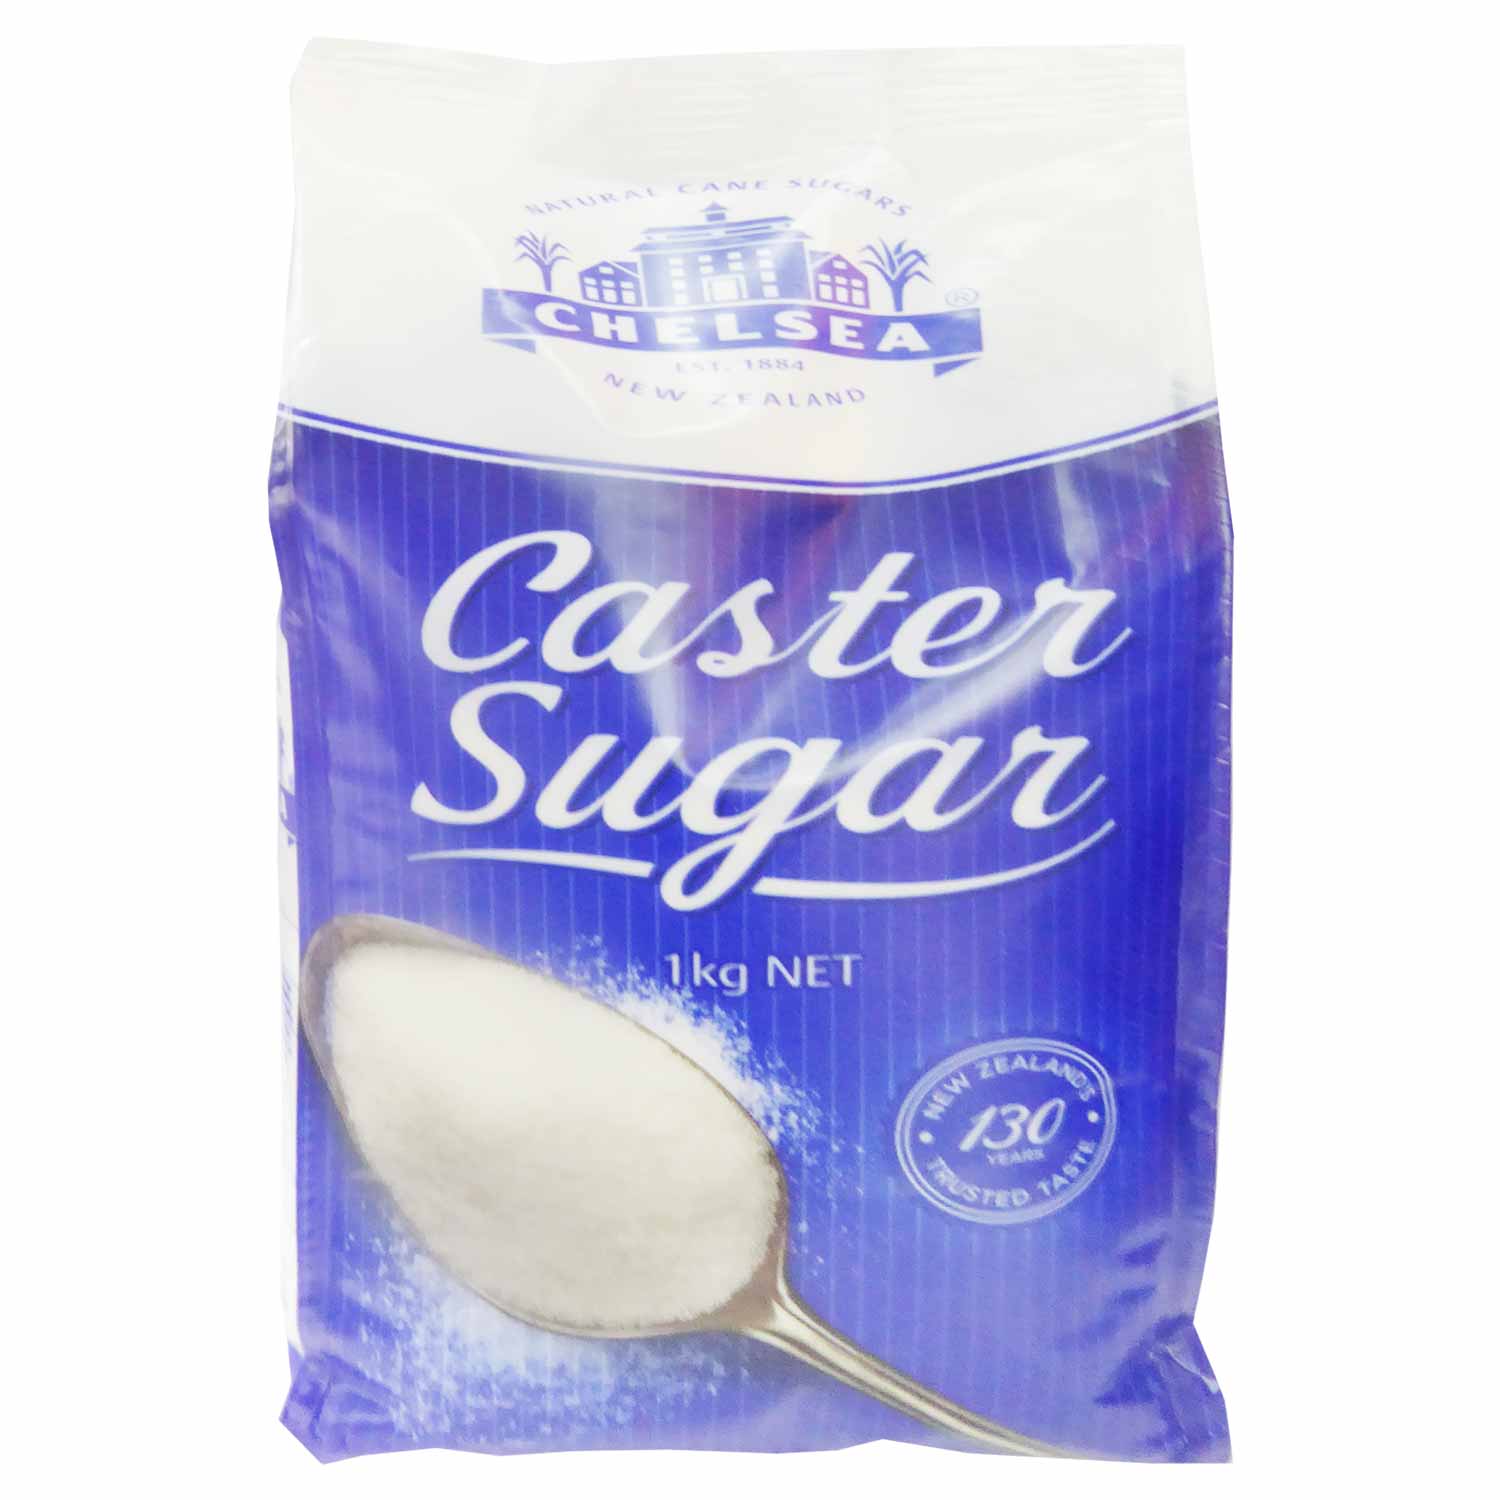 caster sugar